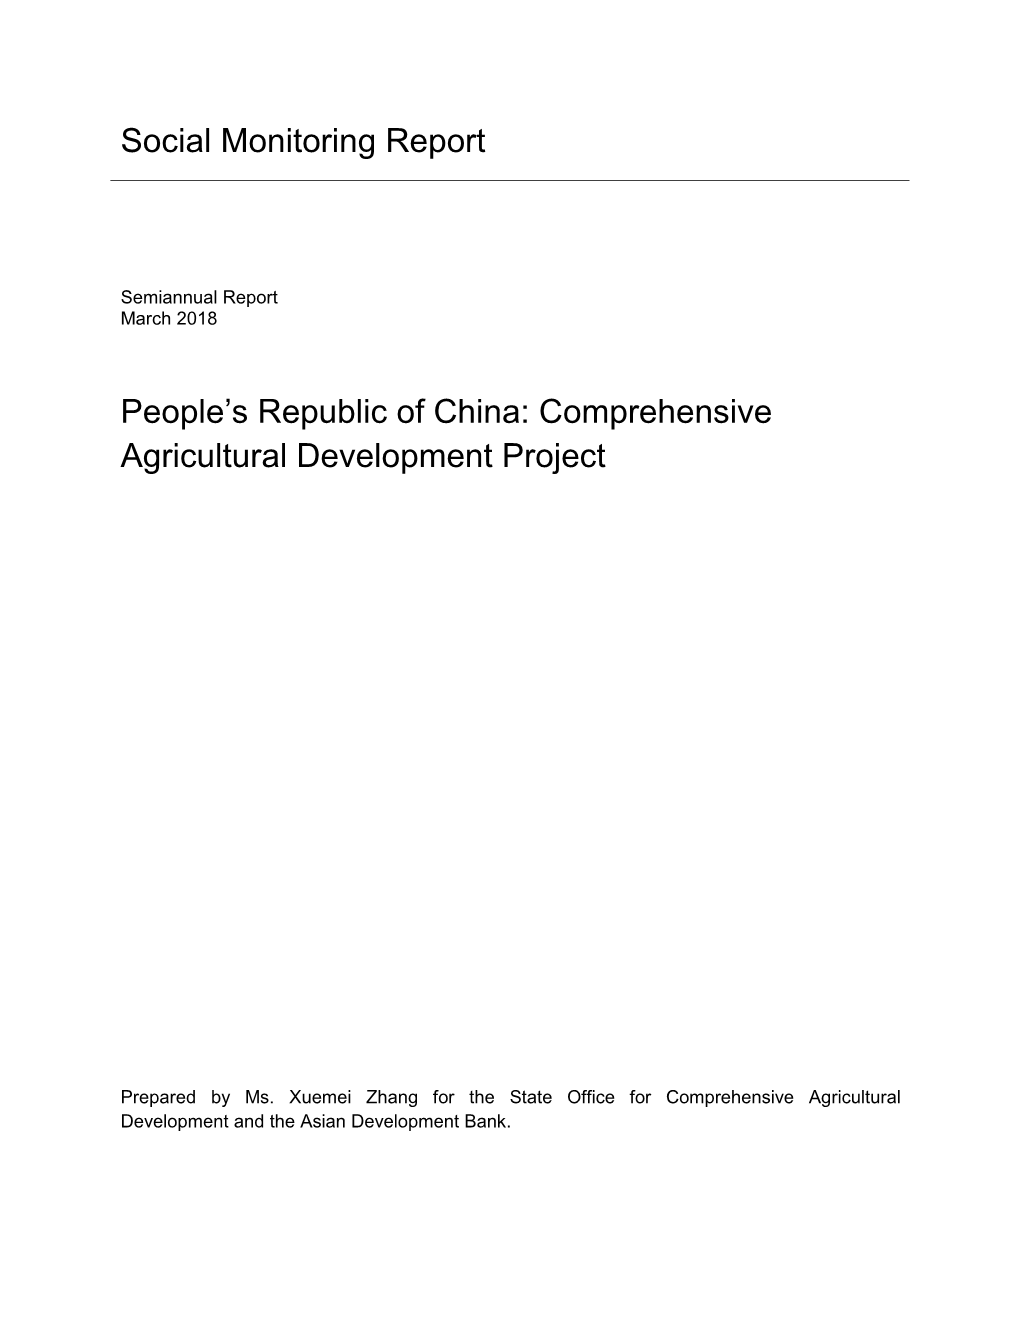 Comprehensive Agricultural Development Project